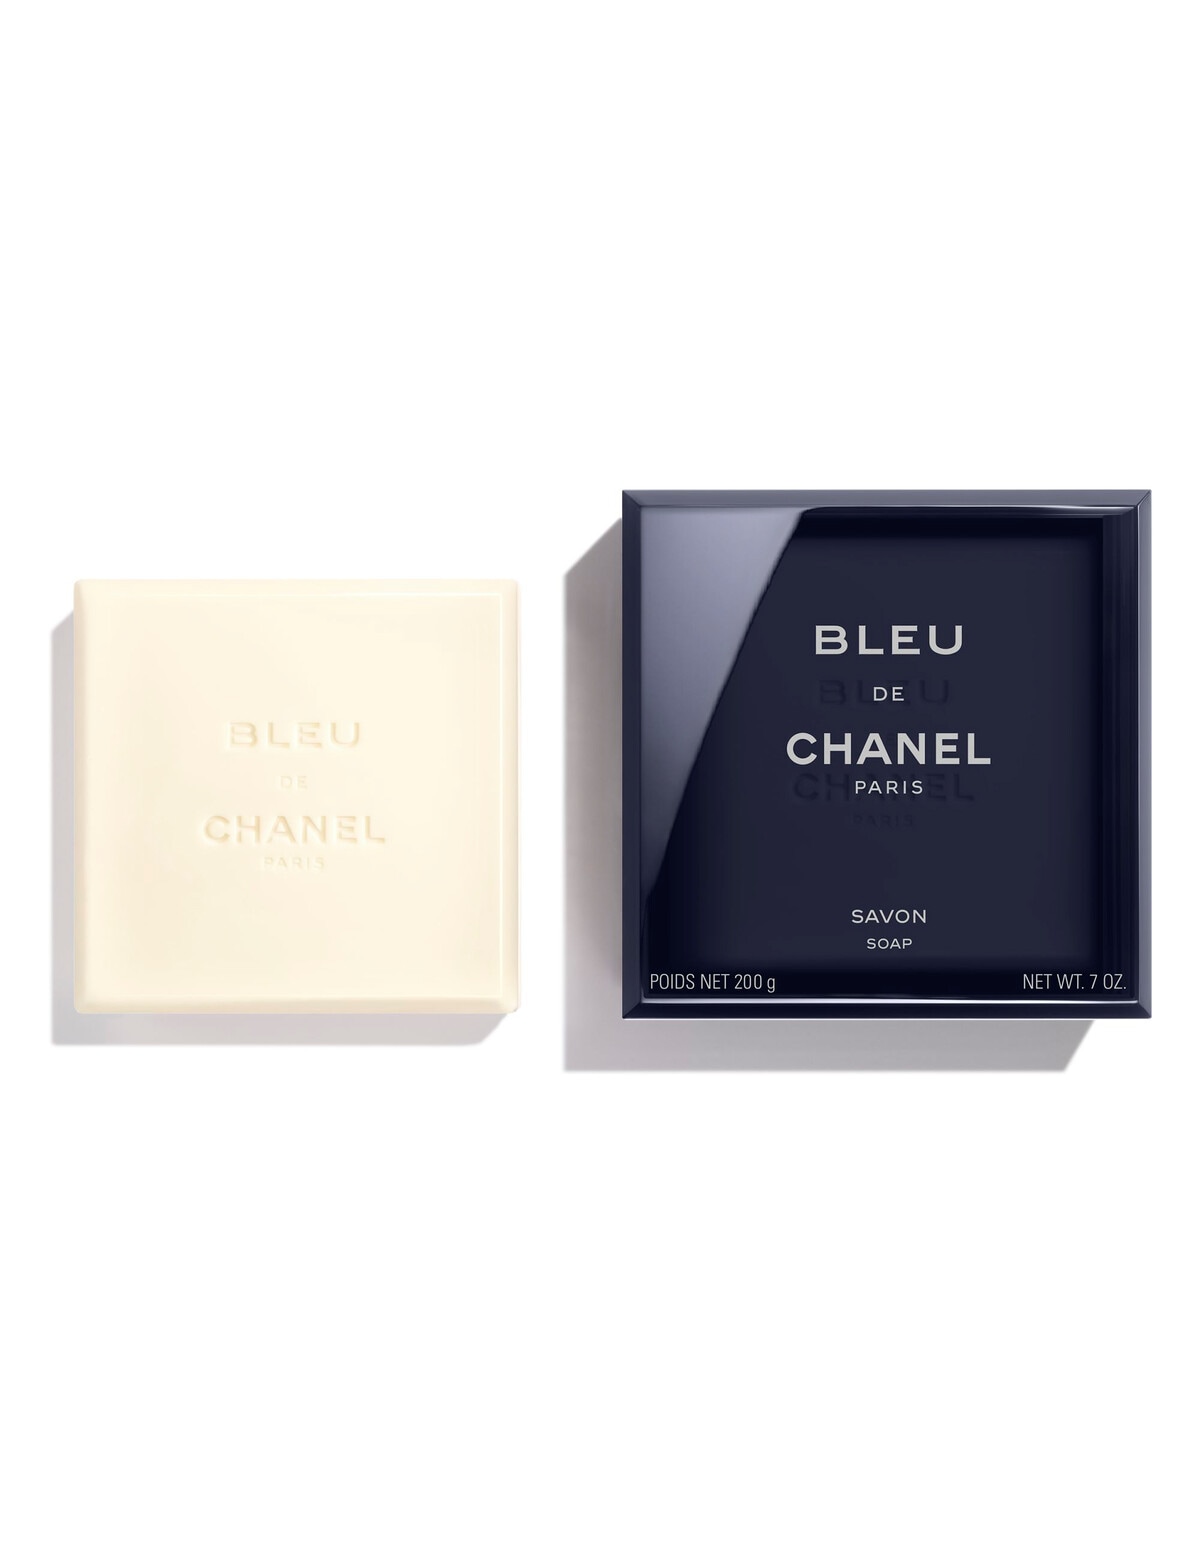 Chanel Bleu De Chanel EDT Perfume